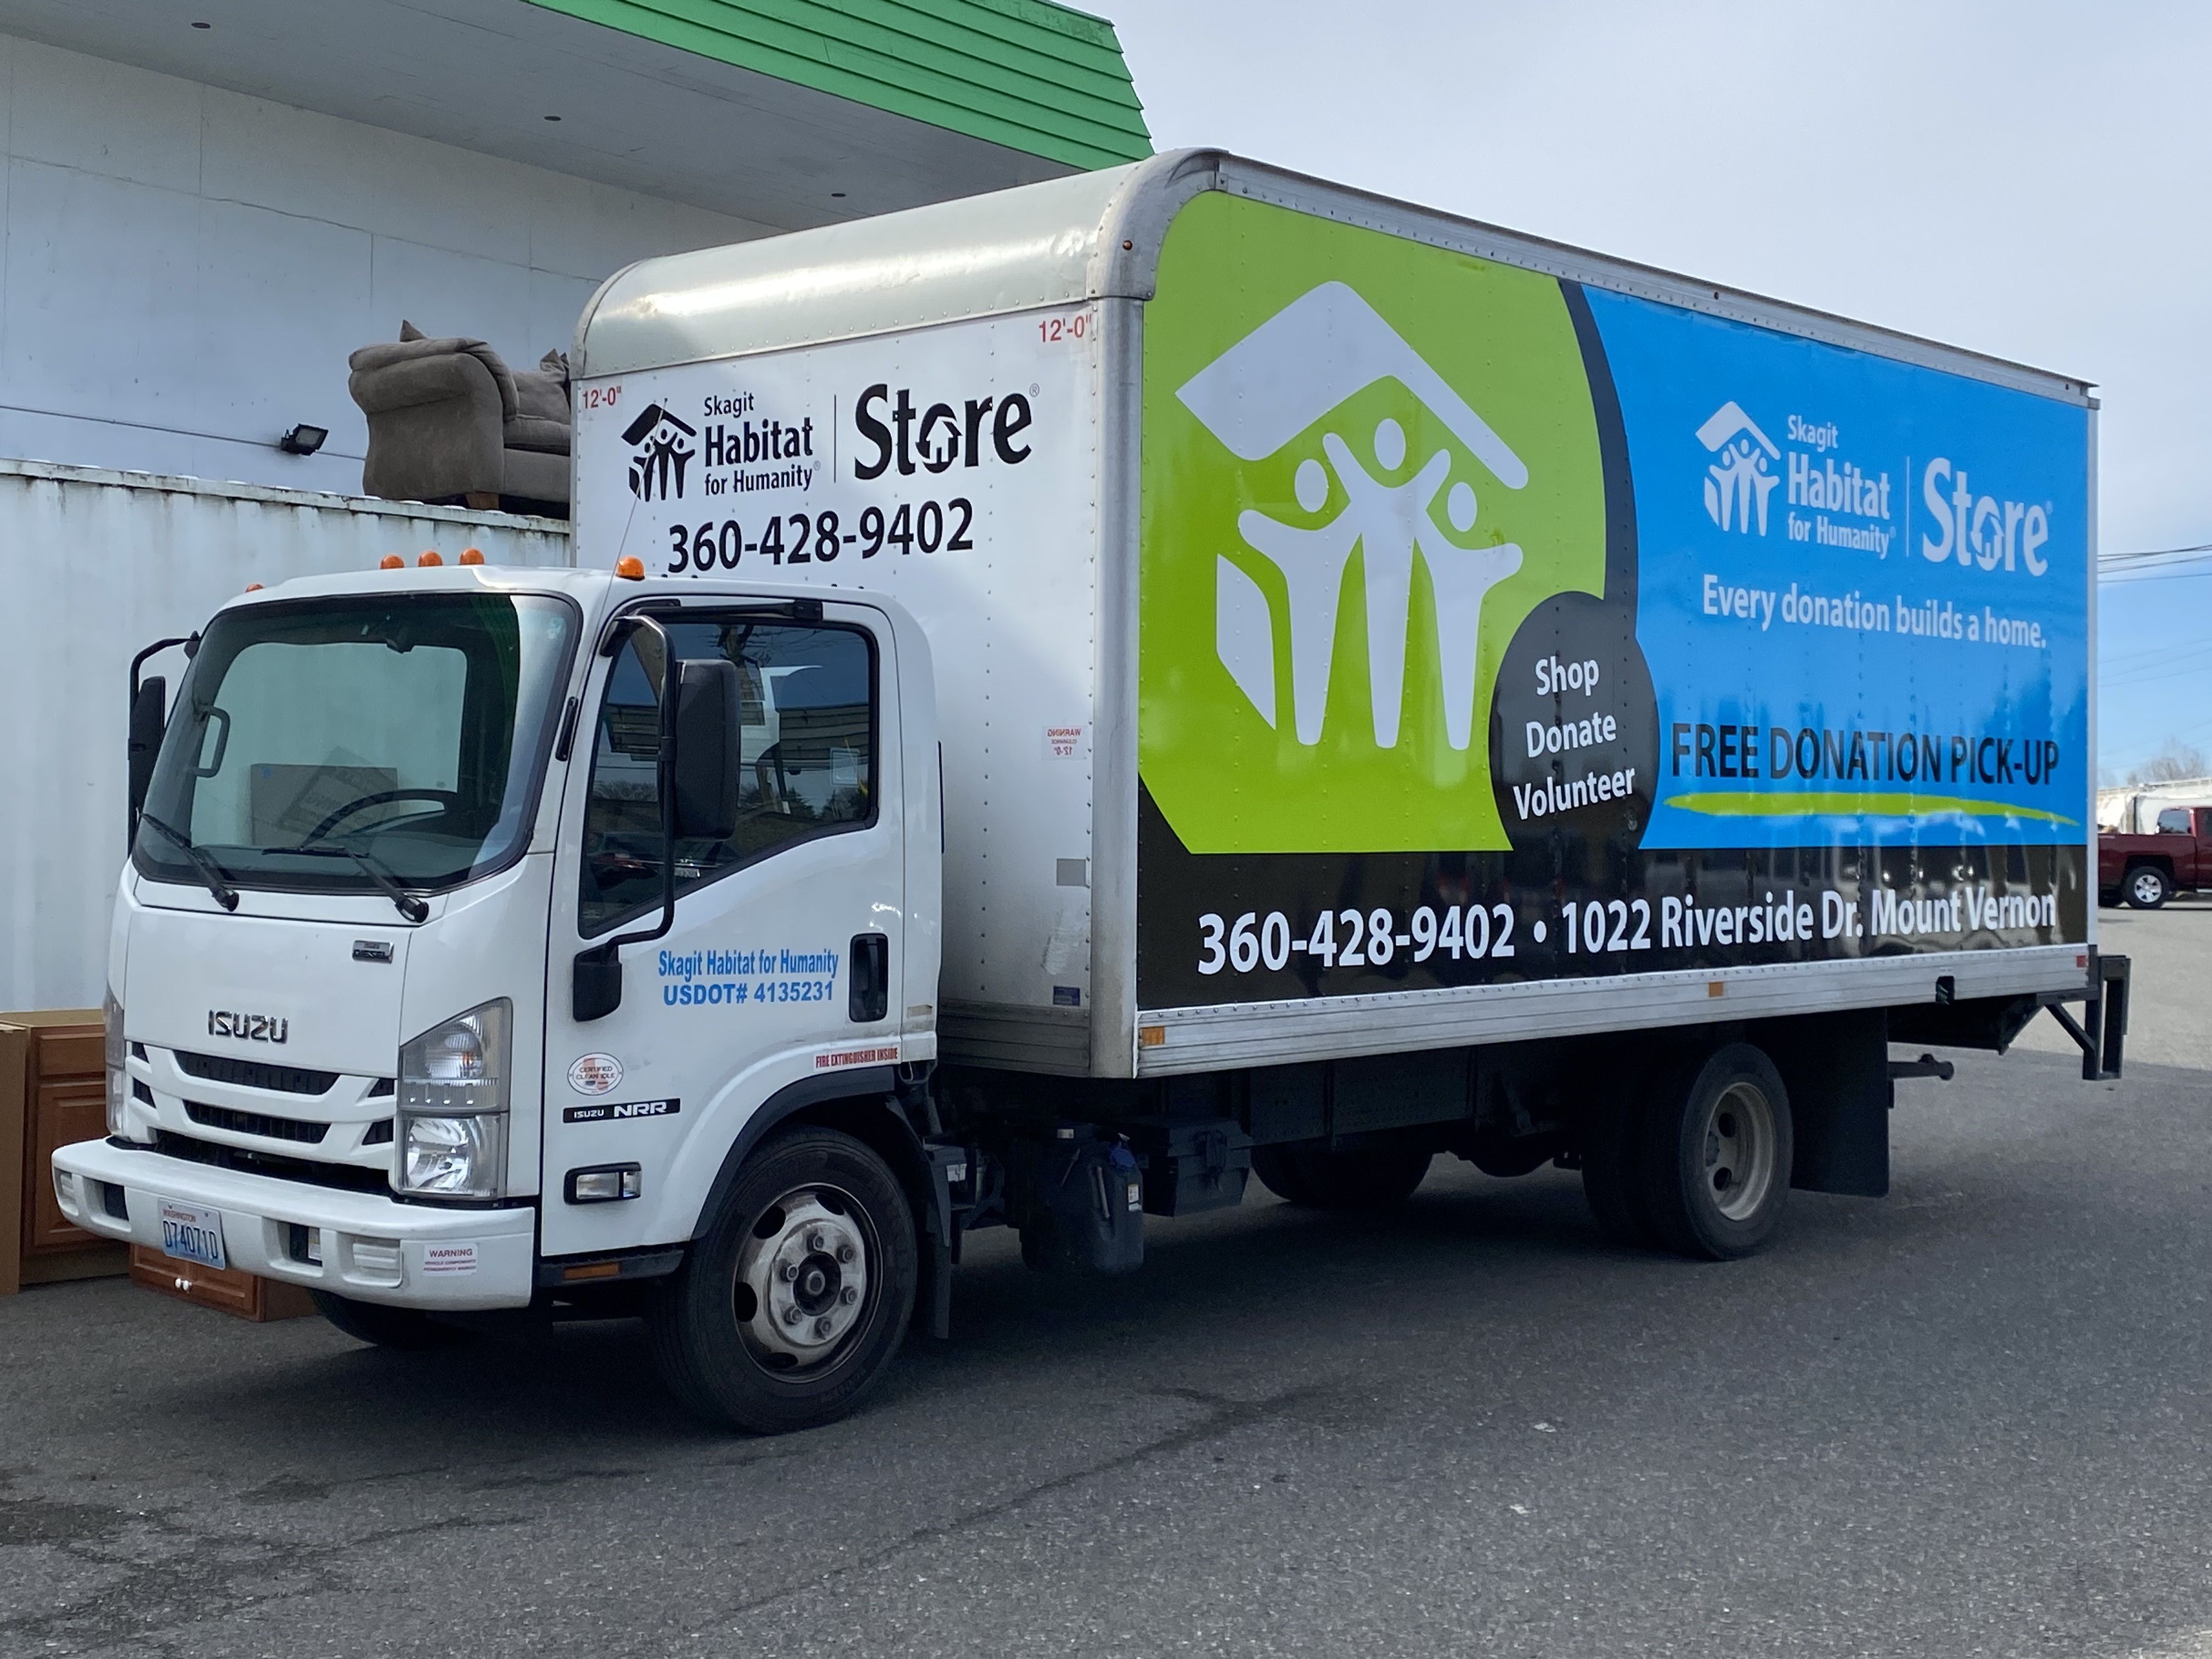 Photo: The Skagit Habitat Store's Donation Pick-Up Box Truck